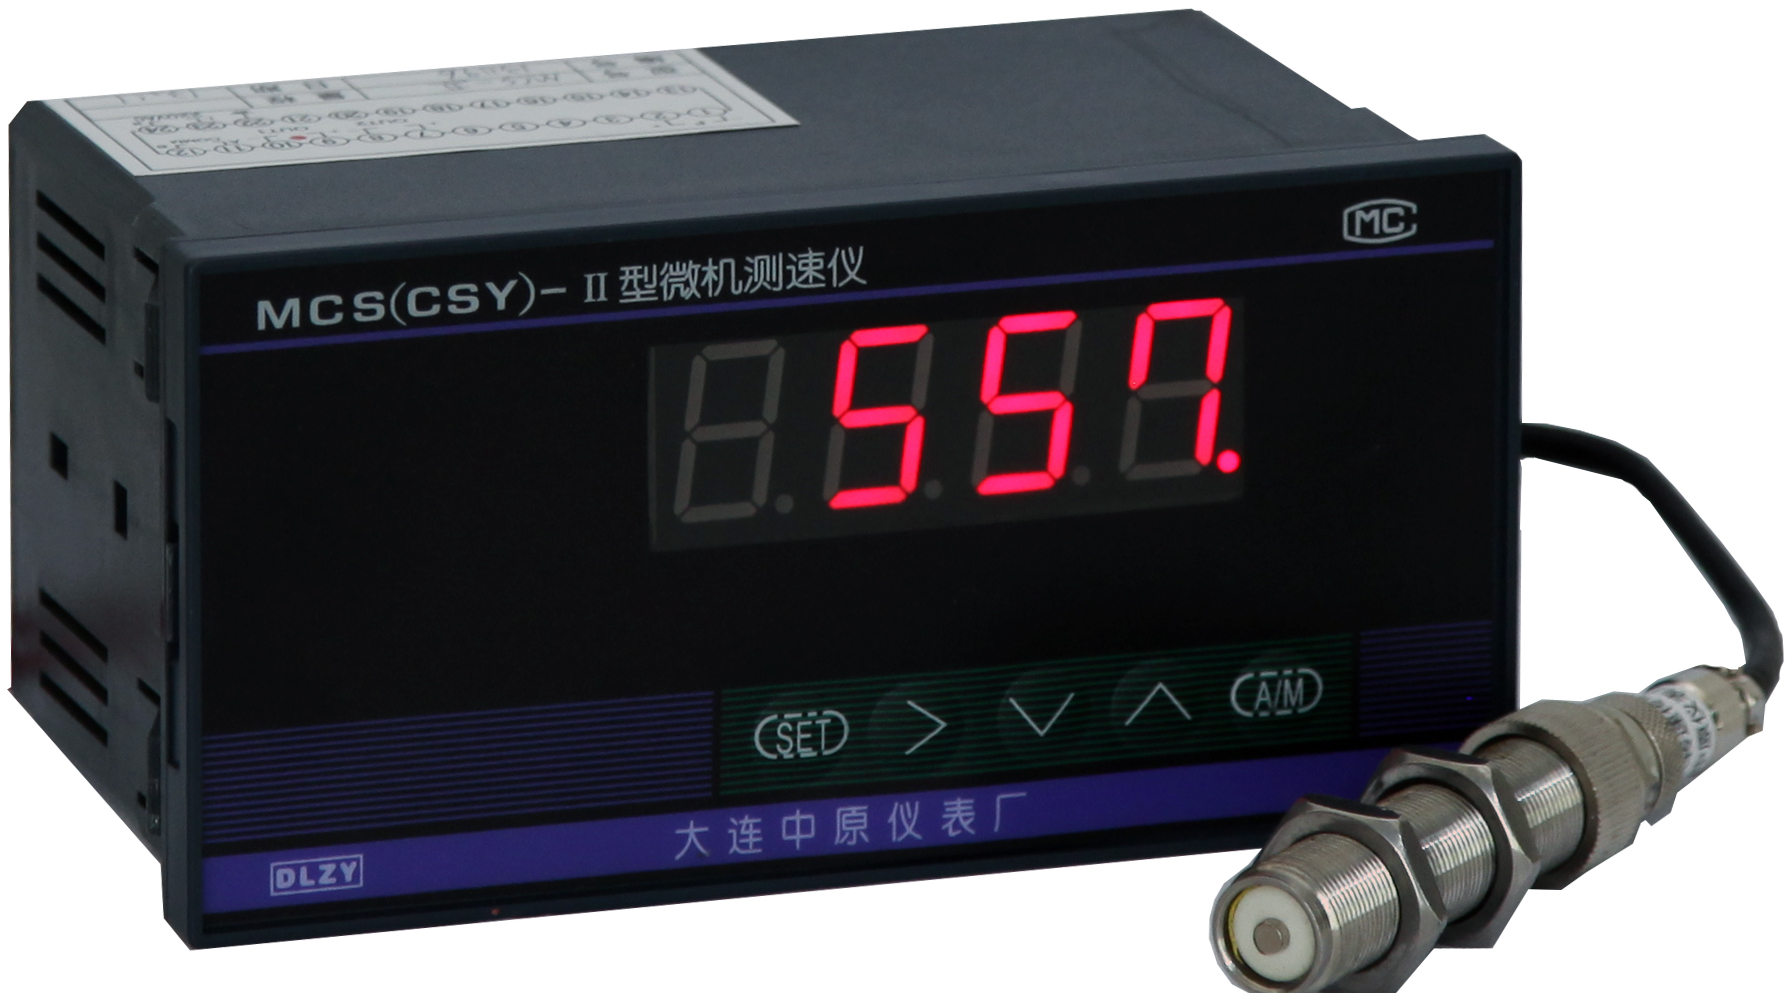 MCS（CSY）-Ⅱ 智能微机测速仪